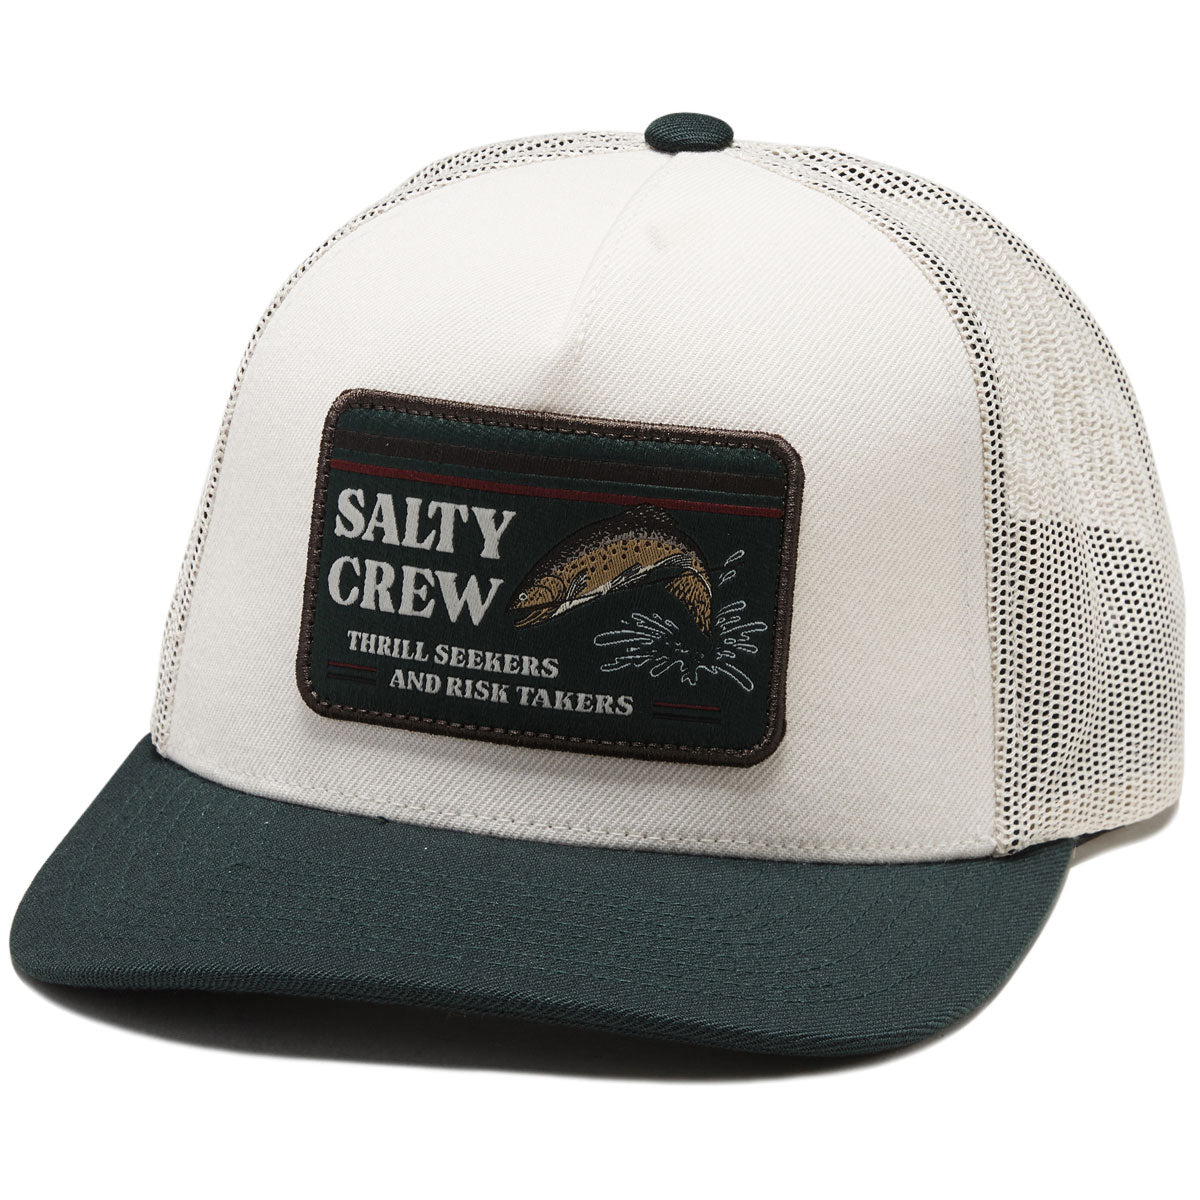 Salty Crew Double Haul Trucker Hat - Ivory/Spruce image 1